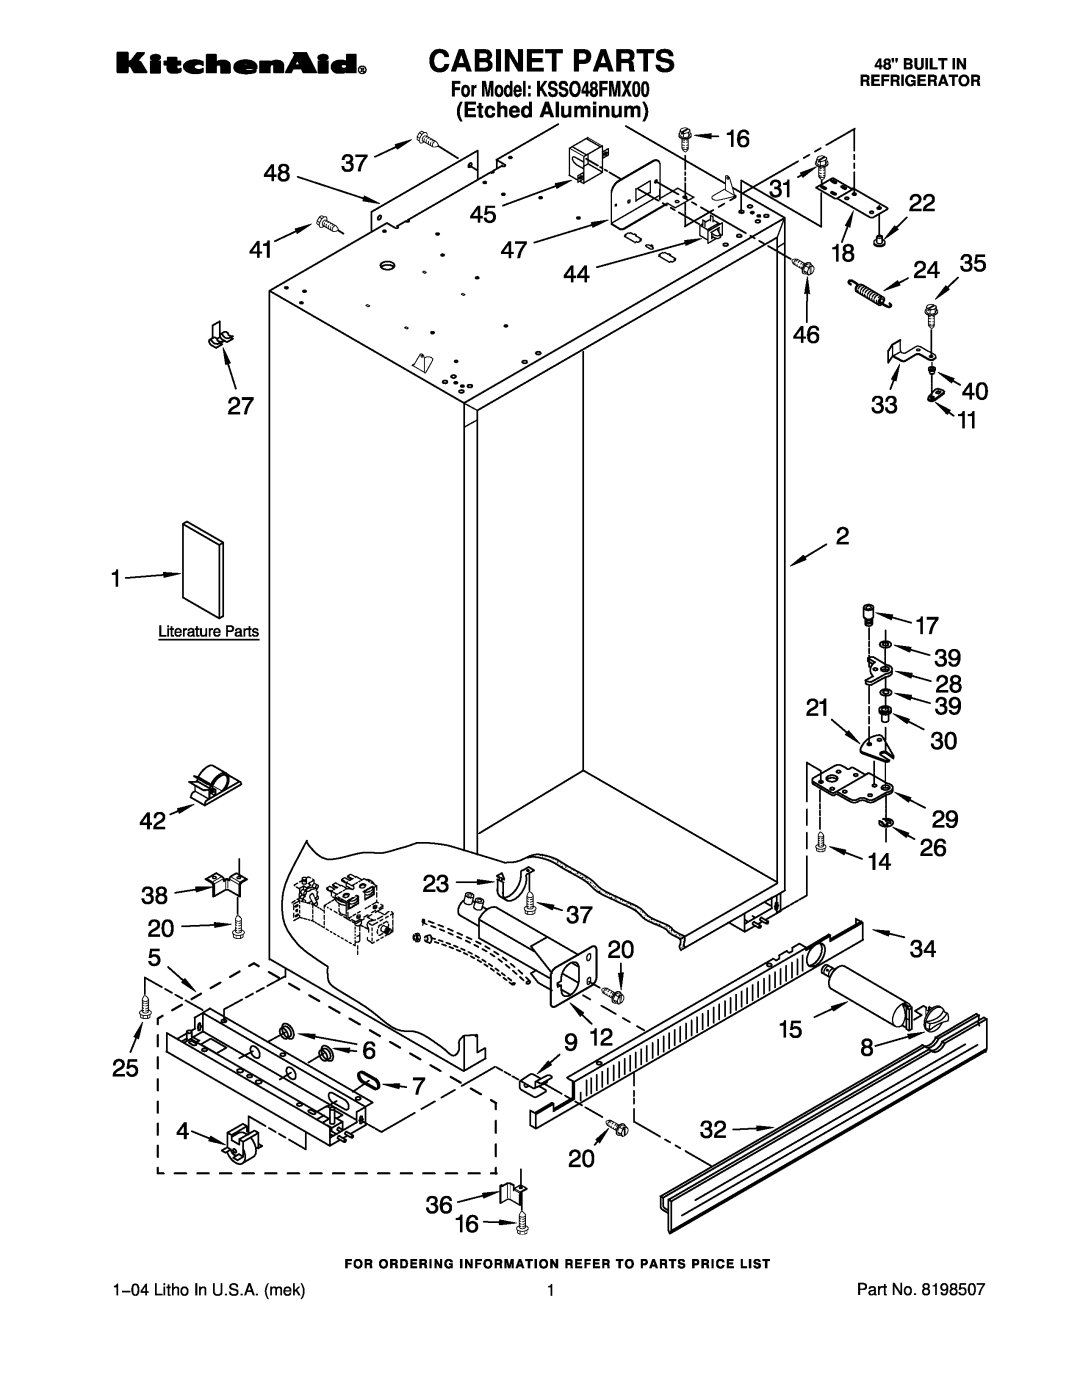 KitchenAid manual Cabinet Parts, For Model KSSO48FMX00 Etched Aluminum, 1−04 Litho In U.S.A. mek, Built In Refrigerator 